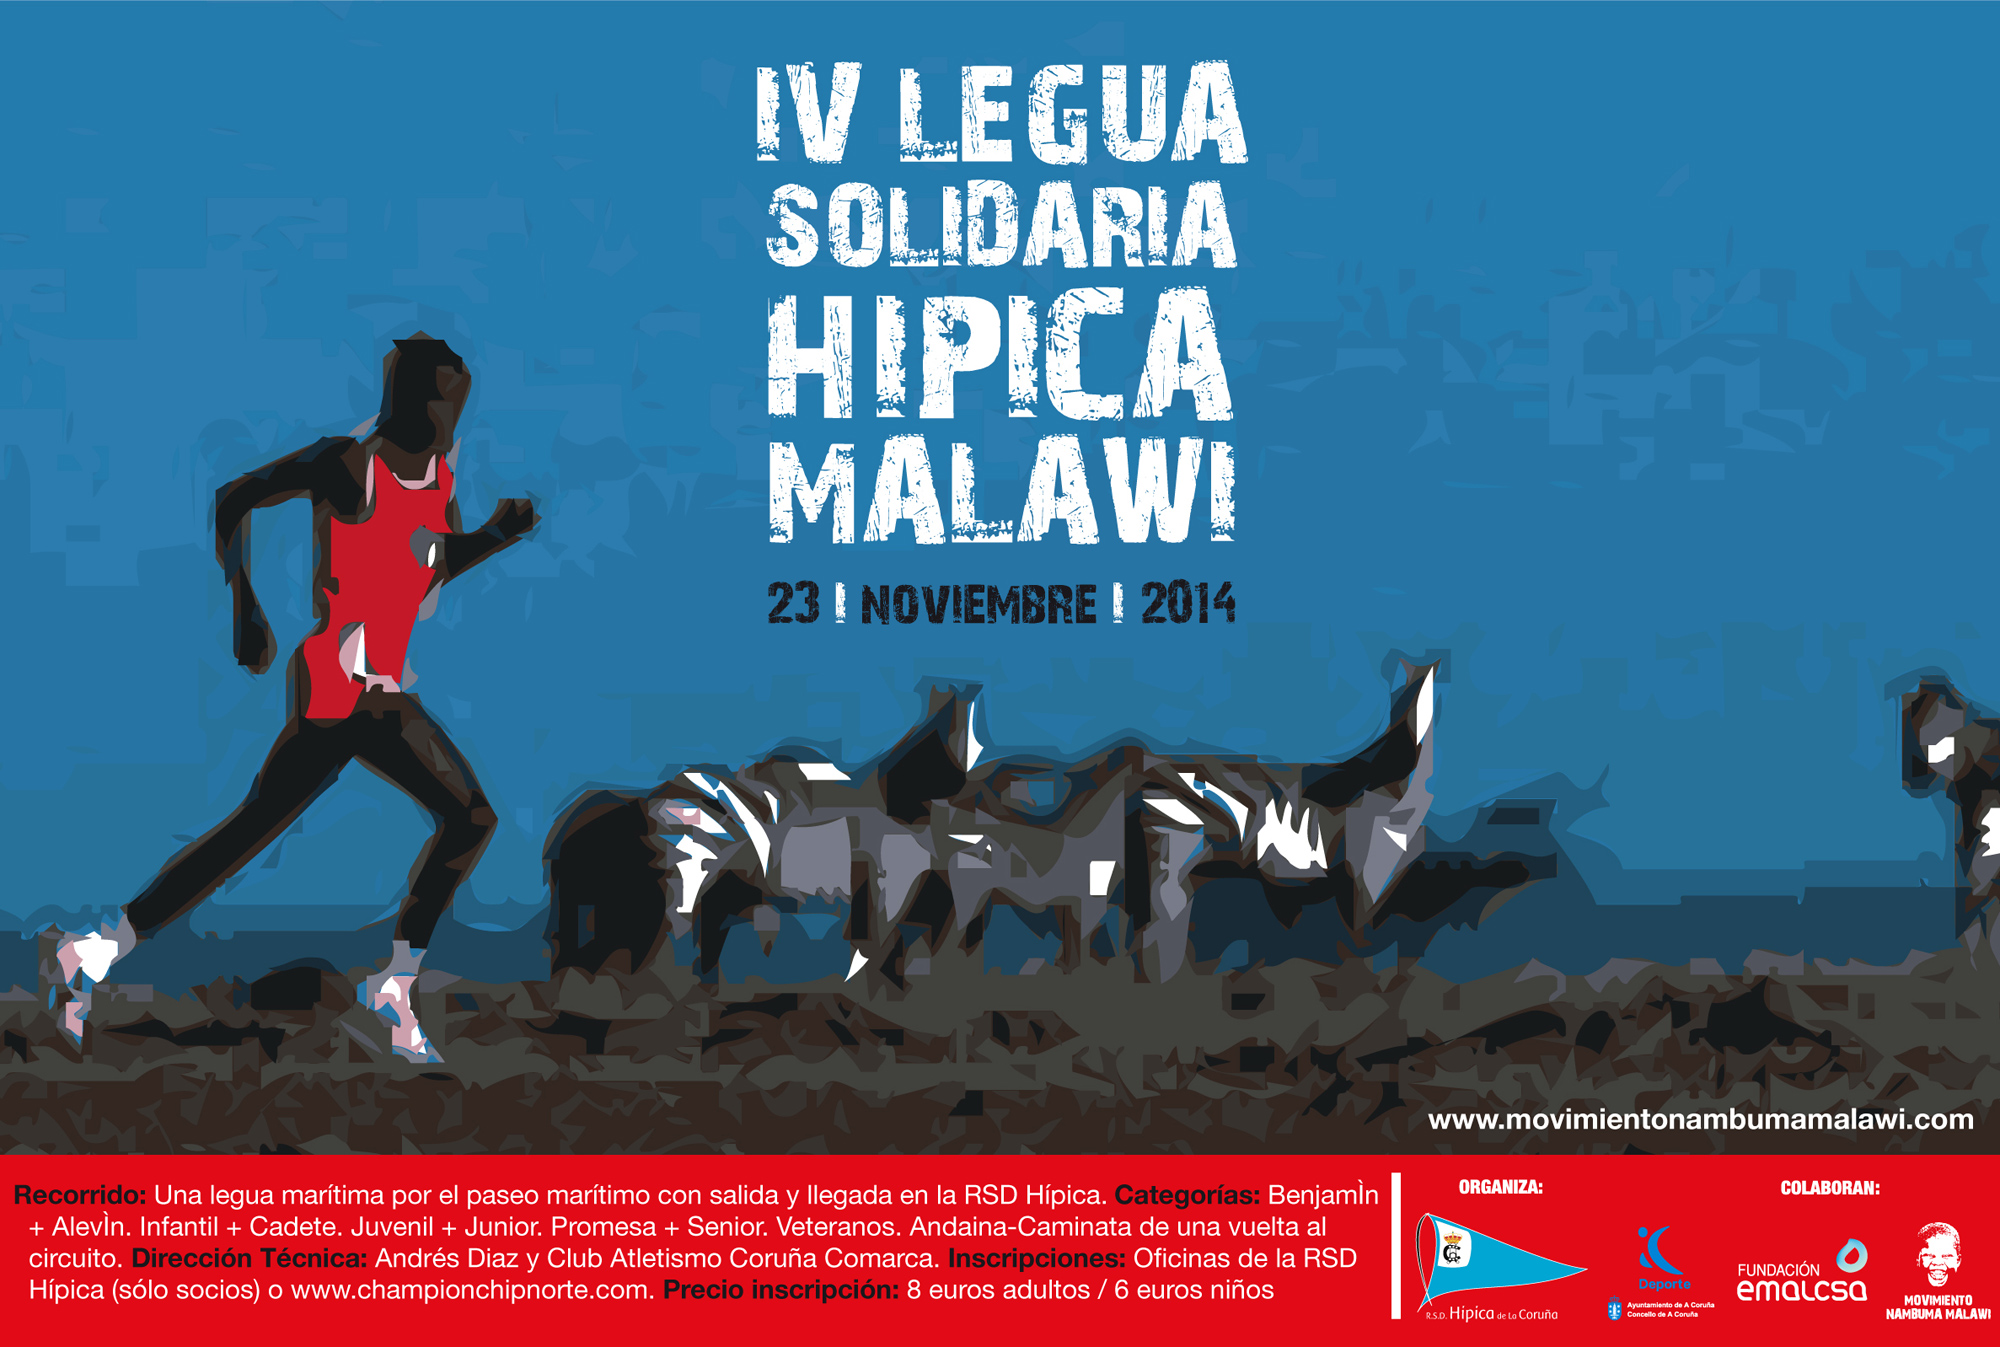 IV Legua marítima solidaria R.S.D. Hípica – Malawi 2014